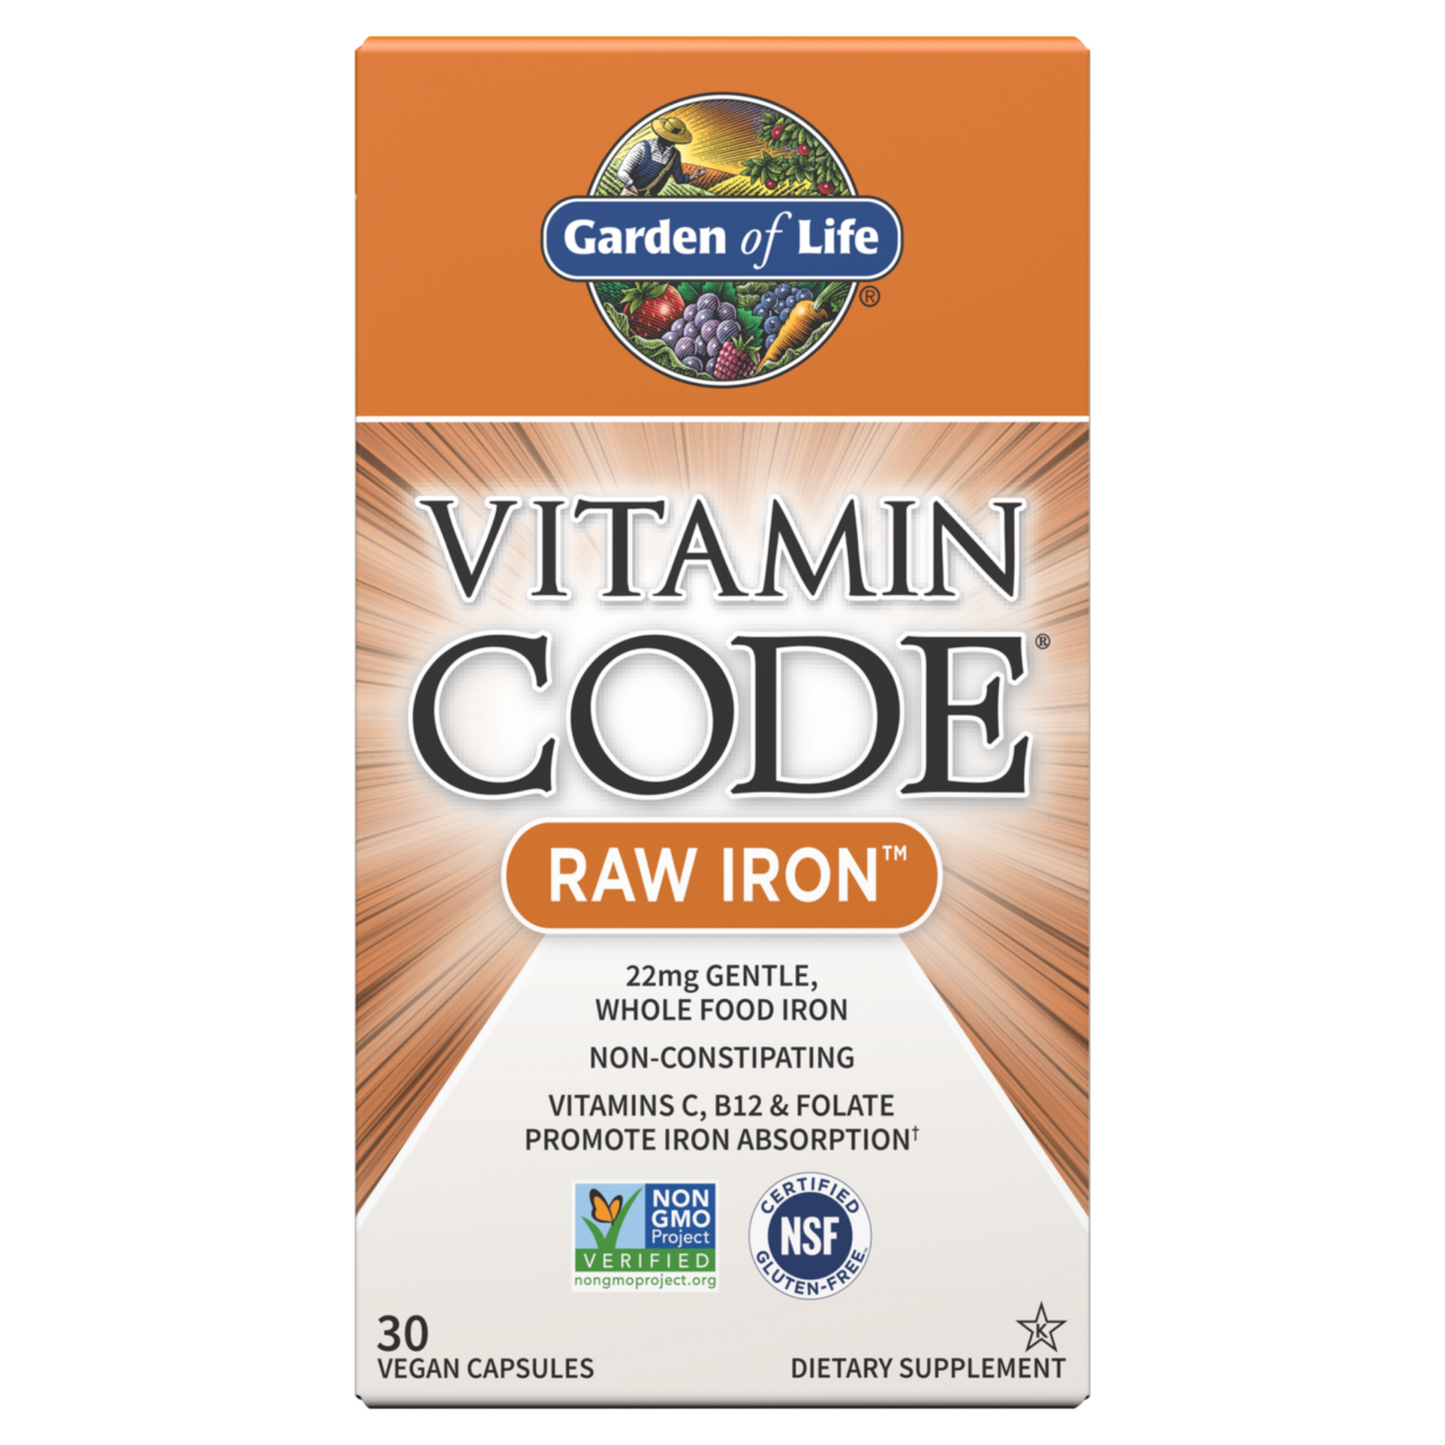 Primary Image of Vitamin Code Raw Iron Capsules